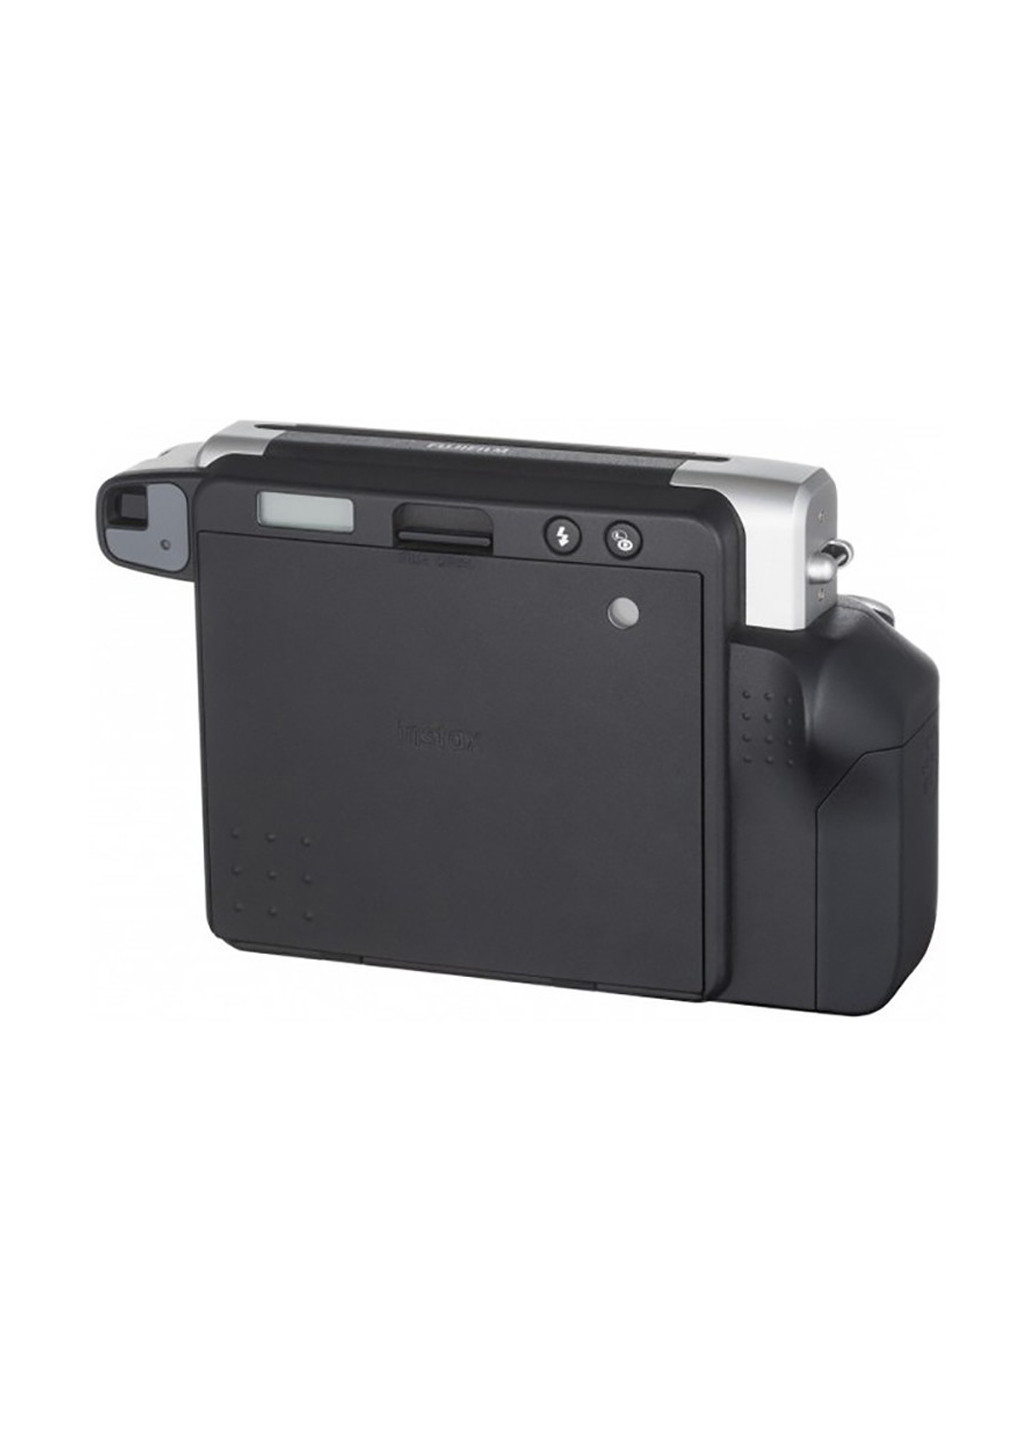 Фотокамера моментальной печати INSTAX 300 Fujifilm моментальной печати instax 300 (151241167)